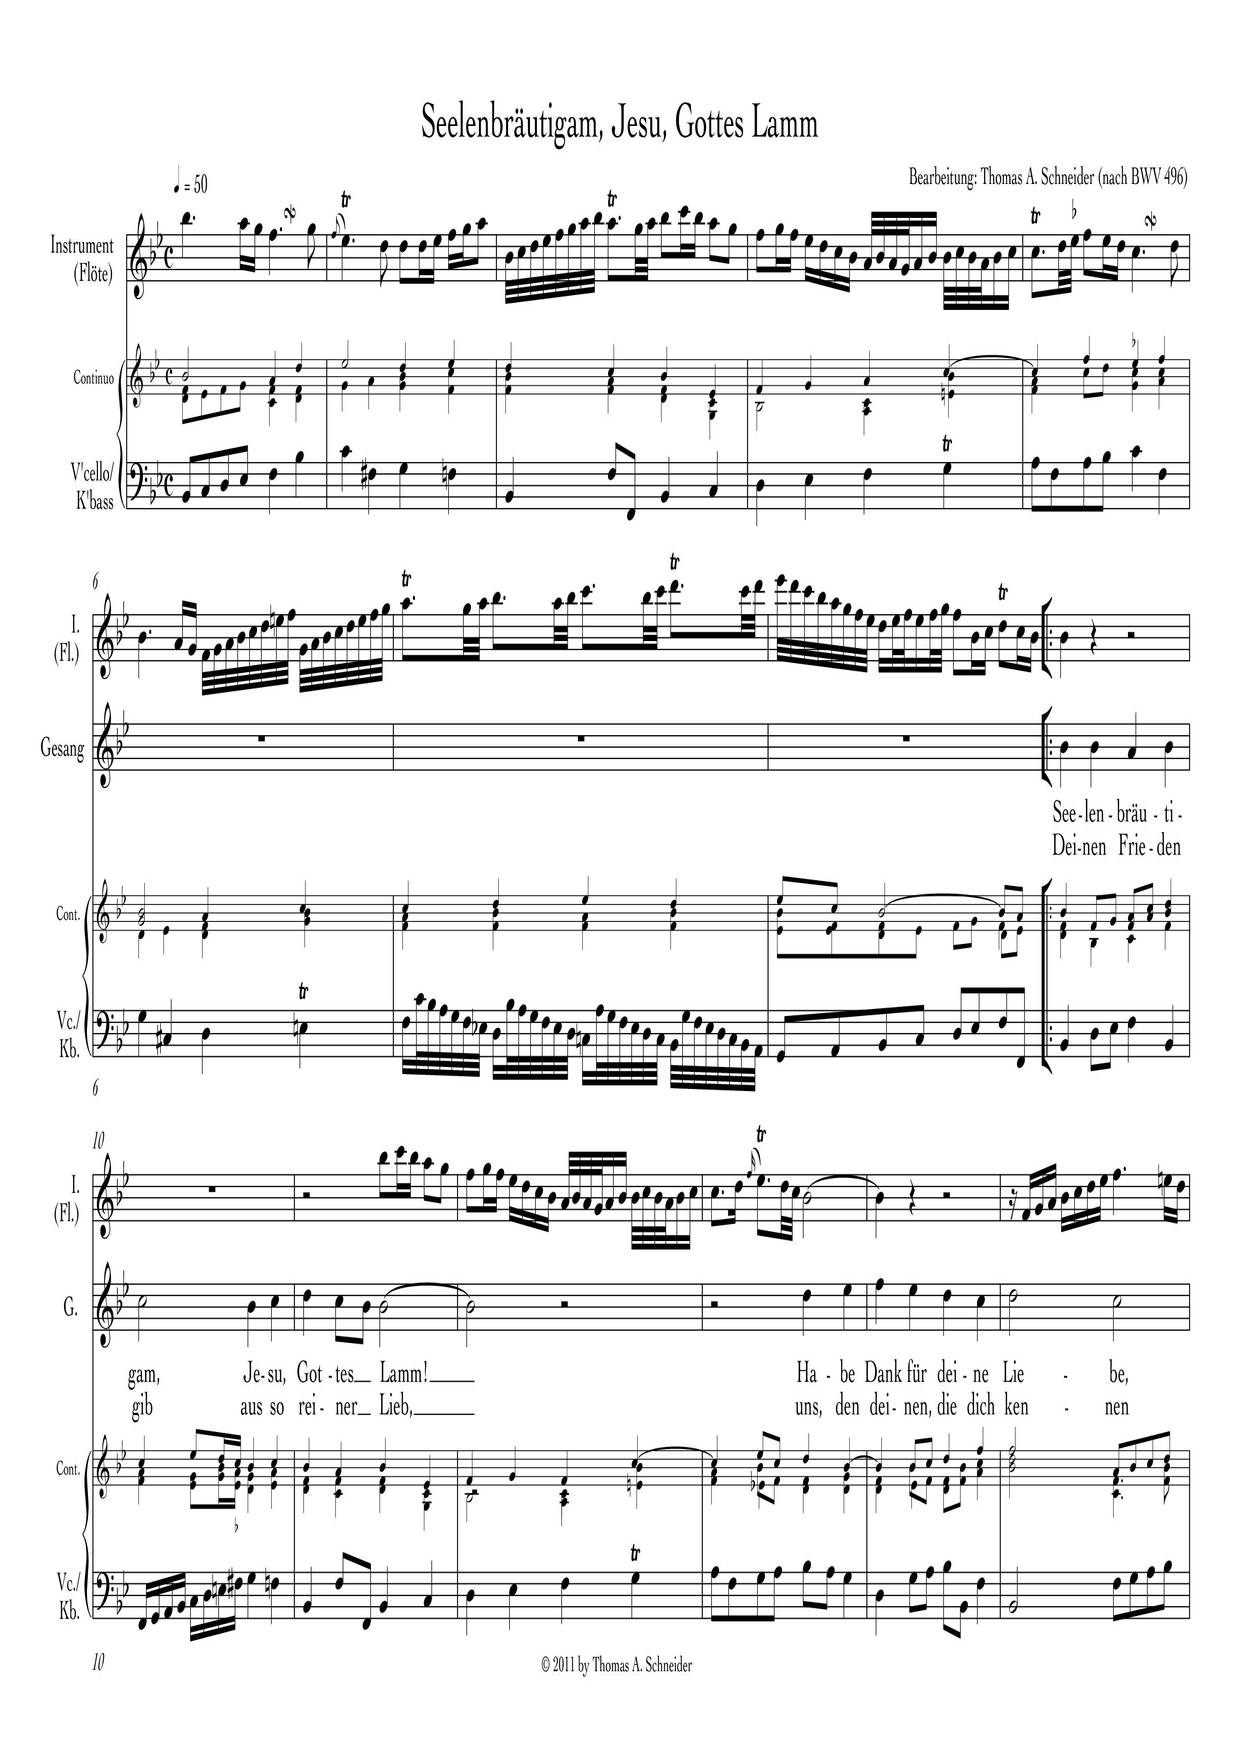 Seelen-Bräutigam, Jesu, Gottes Lamm, BWV 496琴谱